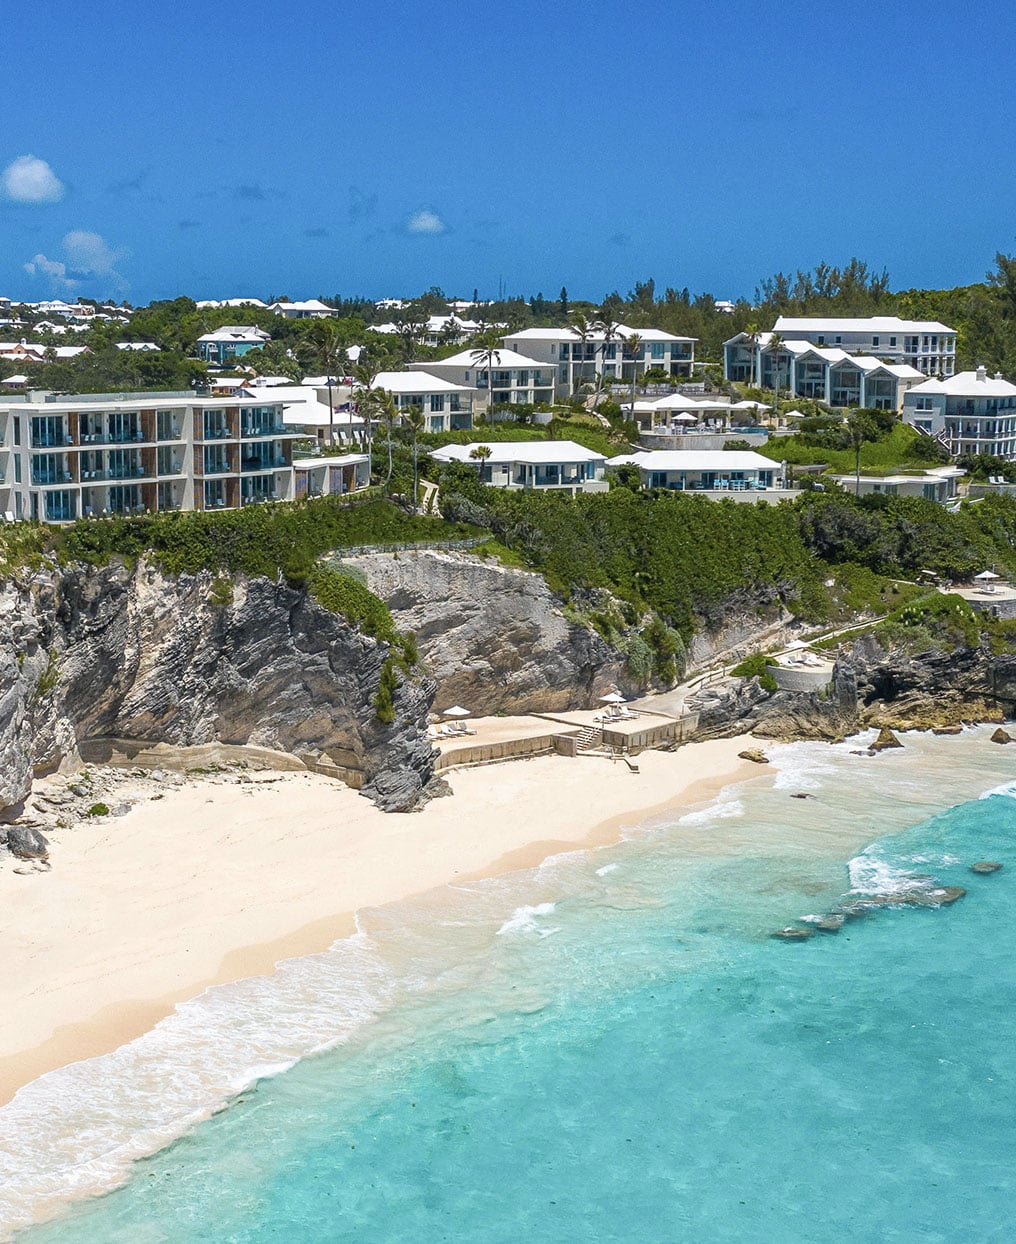 Azure Bermuda View